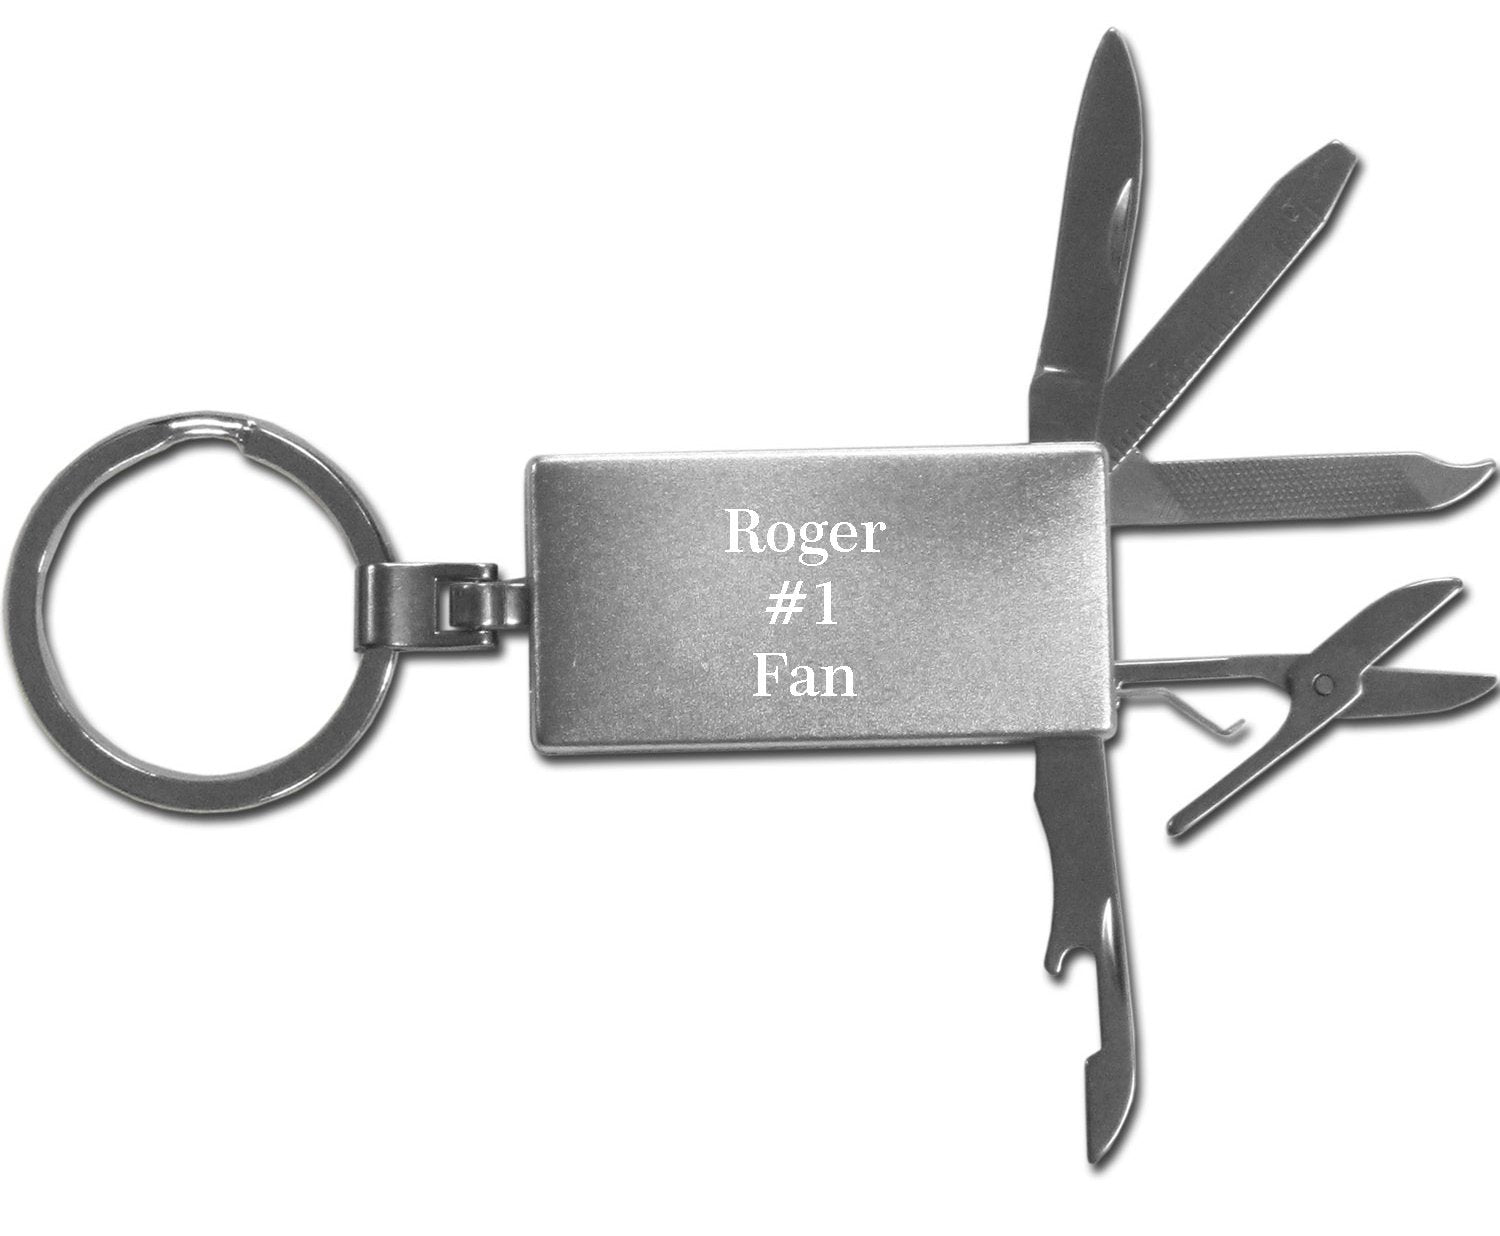 Washington Redskins Multi-tool Key Chain